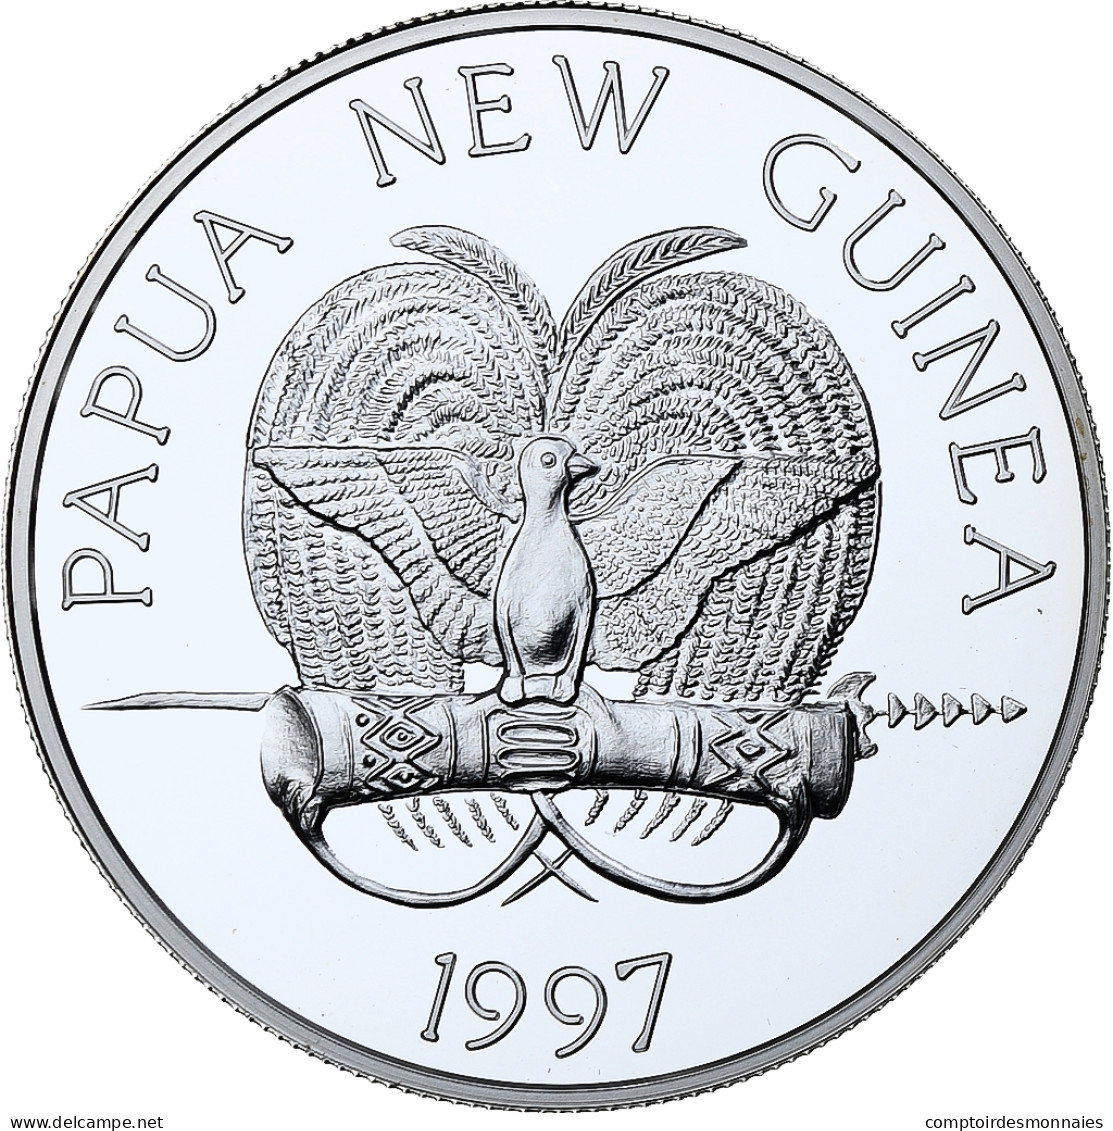 Papouasie-Nouvelle-Guinée, 5 Kina, World Cup France 1998, 1997, BE, Argent, FDC - Papouasie-Nouvelle-Guinée